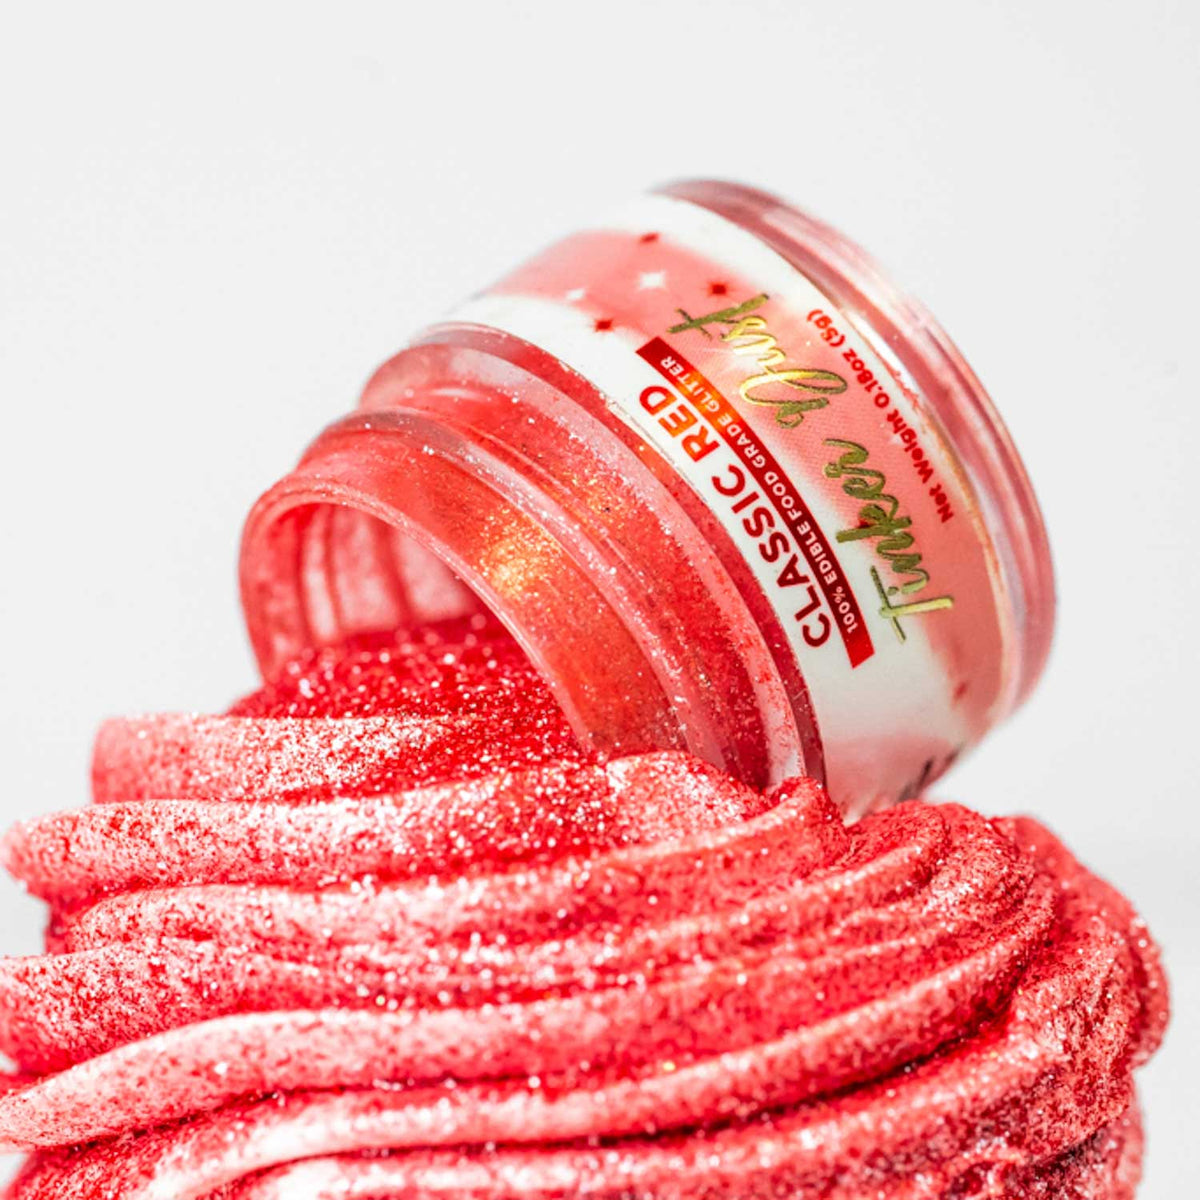 BAKELL® Classic Red Edible Glitter Spray Pump, (25g) | TINKER DUST Edible  Glitter | KOSHER Certified | 100% Edible Glitter | Cakes, Cupcakes, Cake